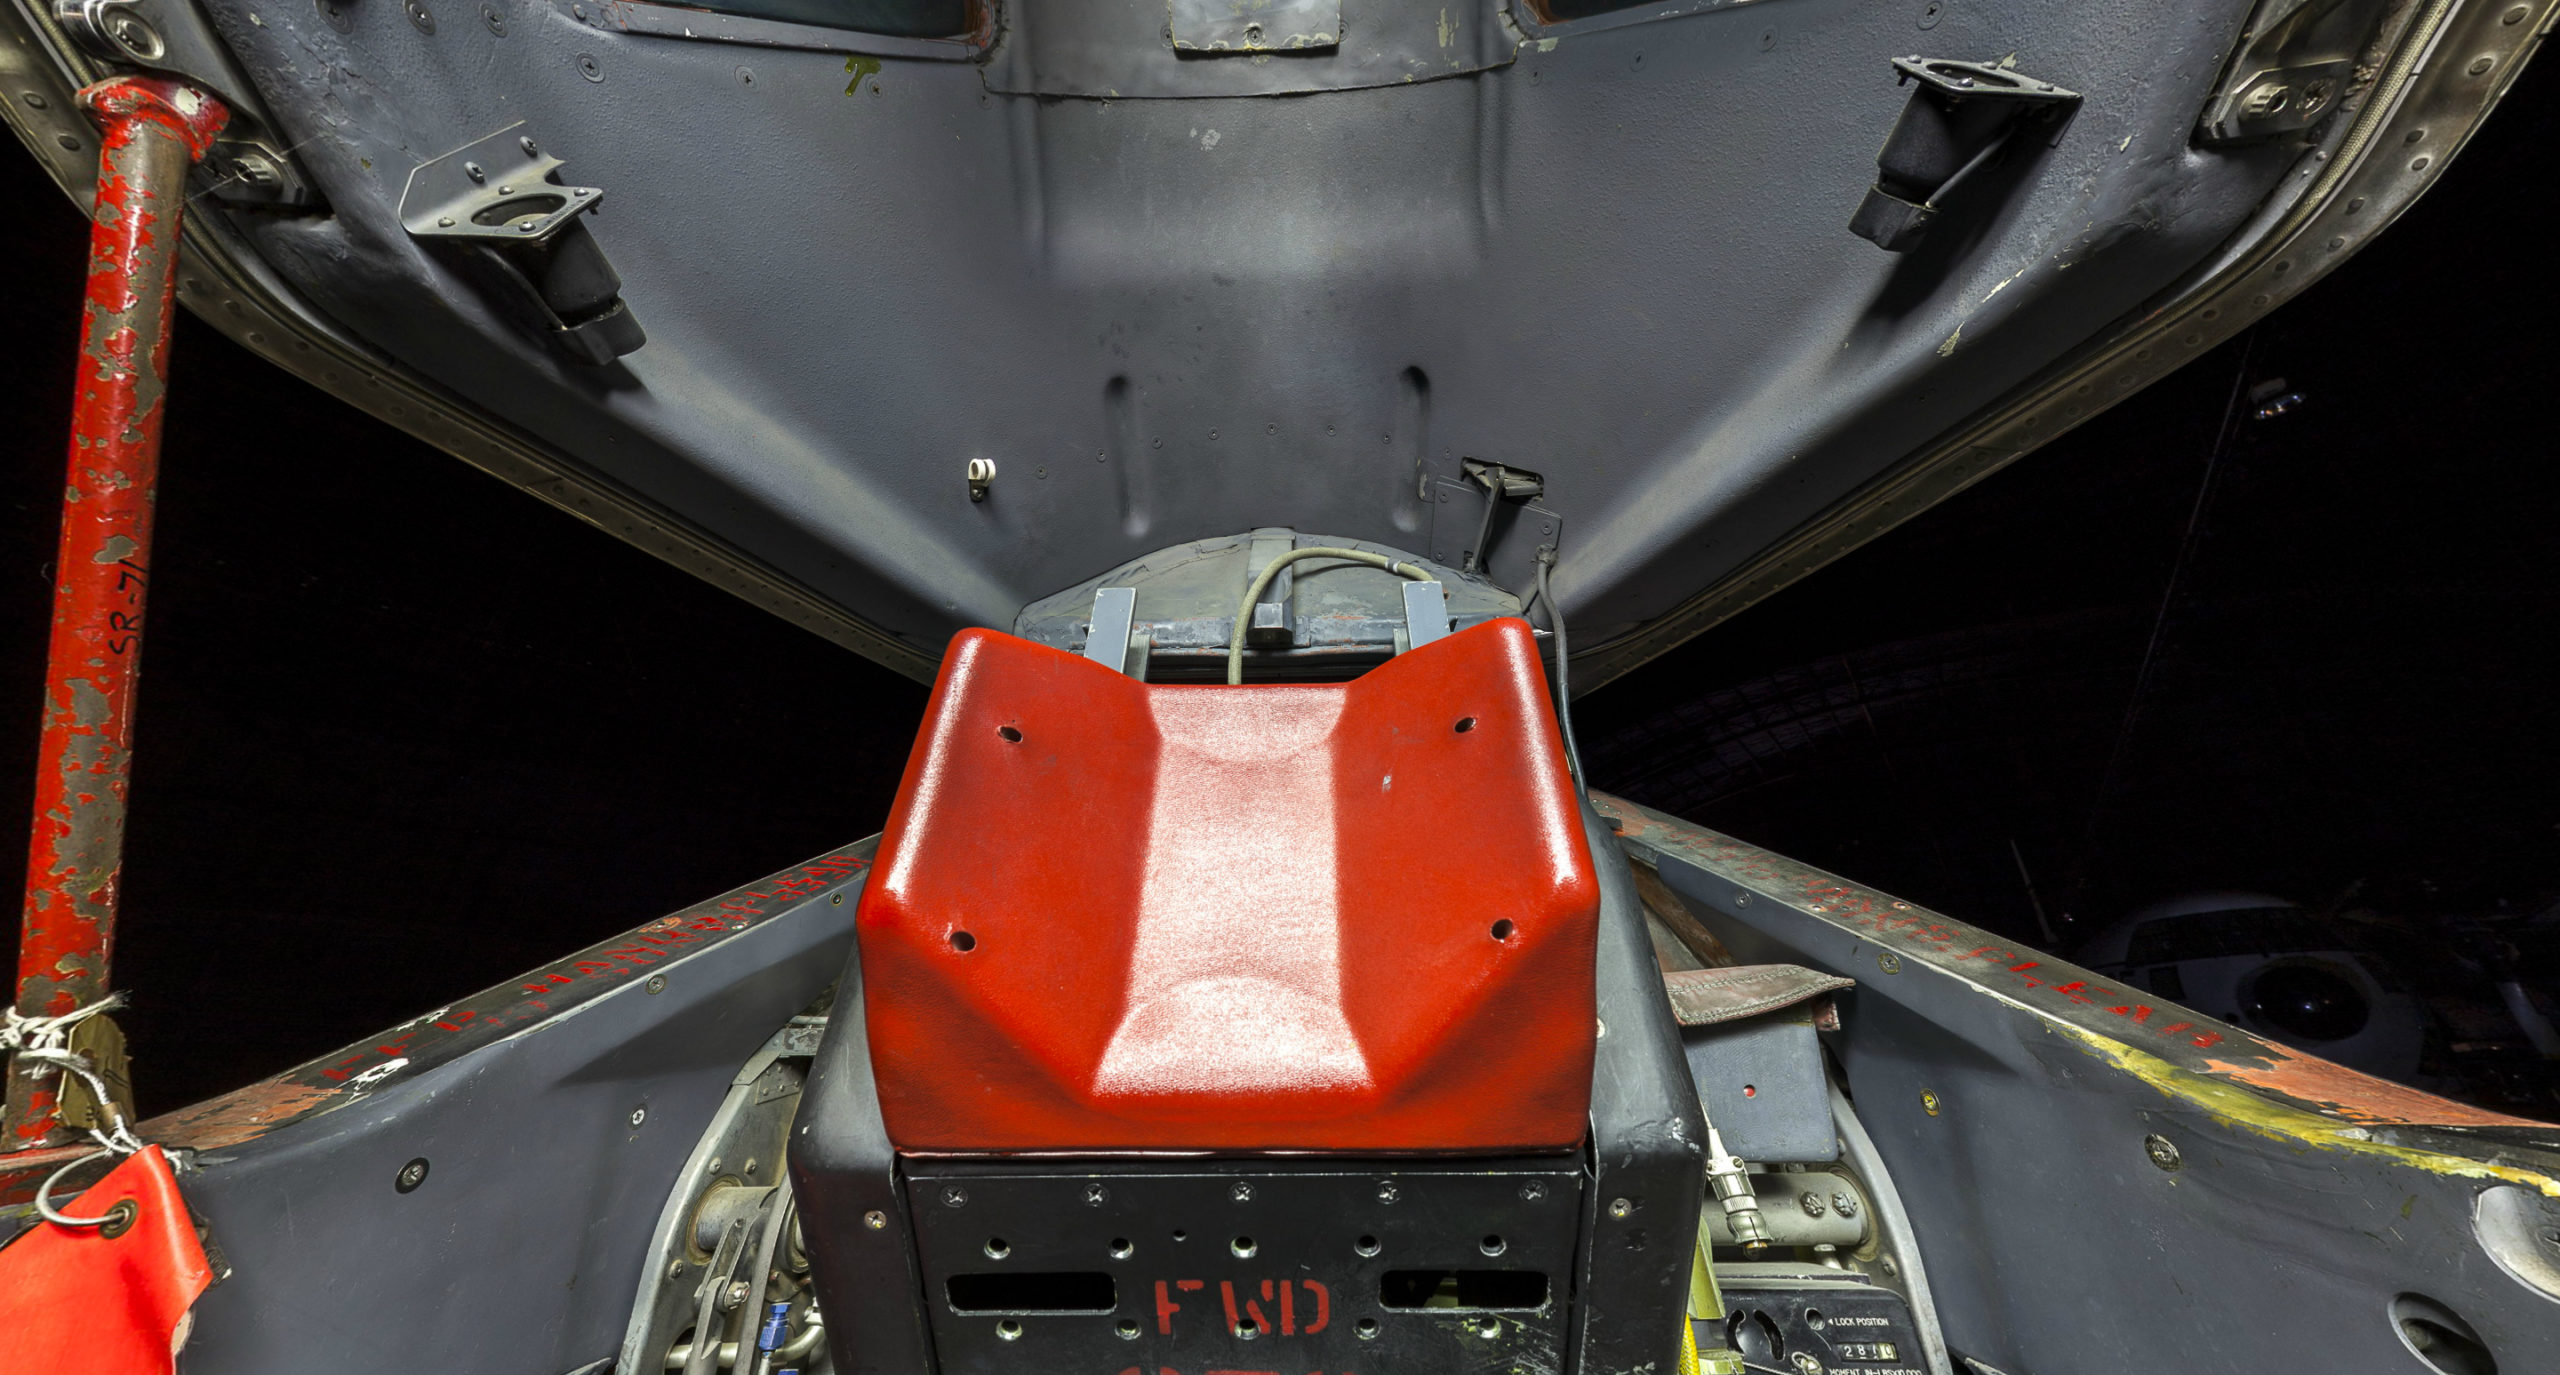 Amazing Ultra-High Definition Photo Of The SR-71 Blackbird Cockpit